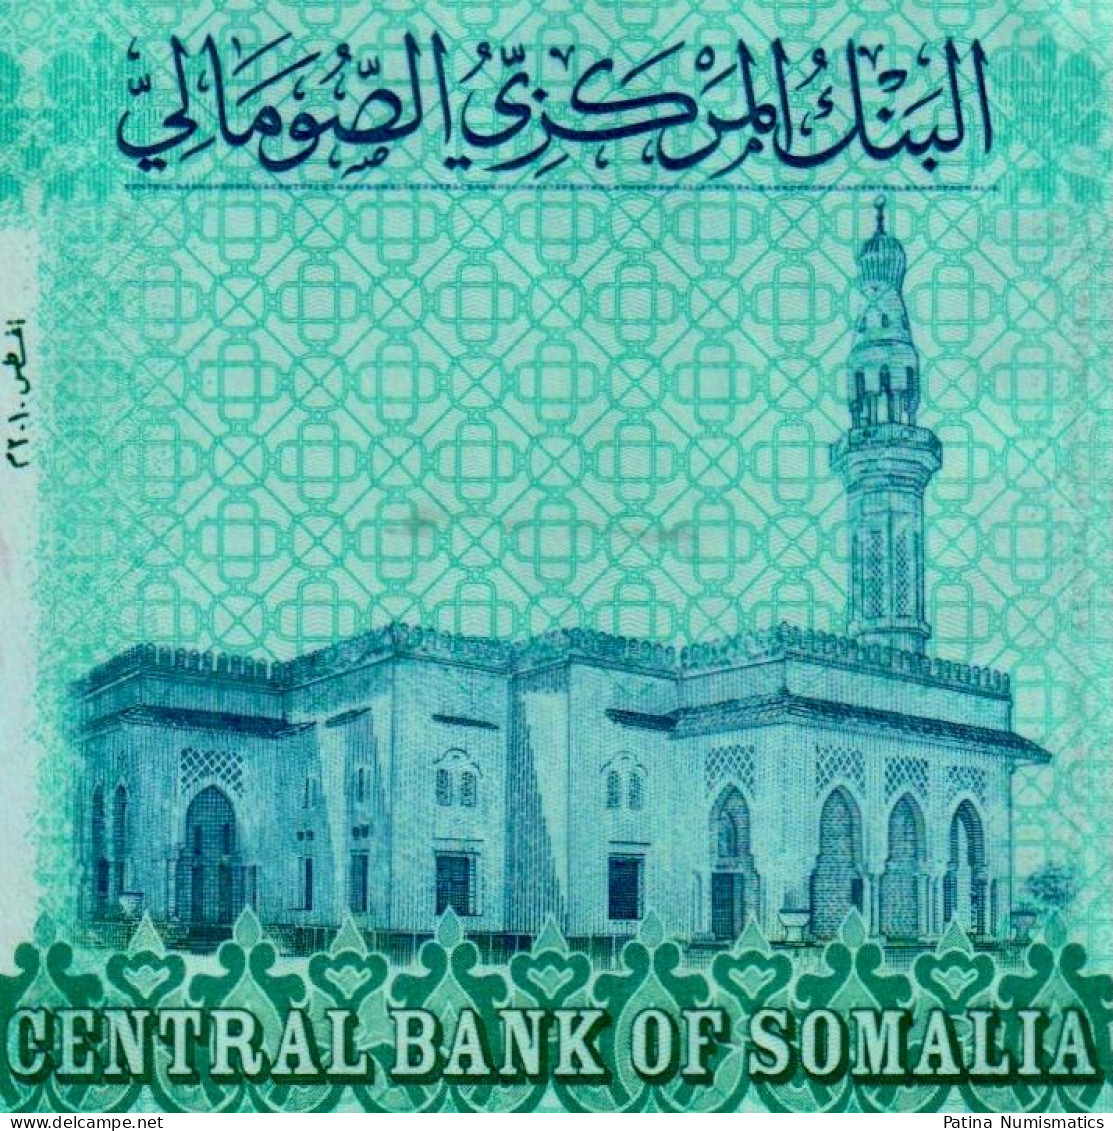 Somalia 50000 Shillings 2010 ND 2023 P 43 Lion Watermark Crisp UNC - Somalia